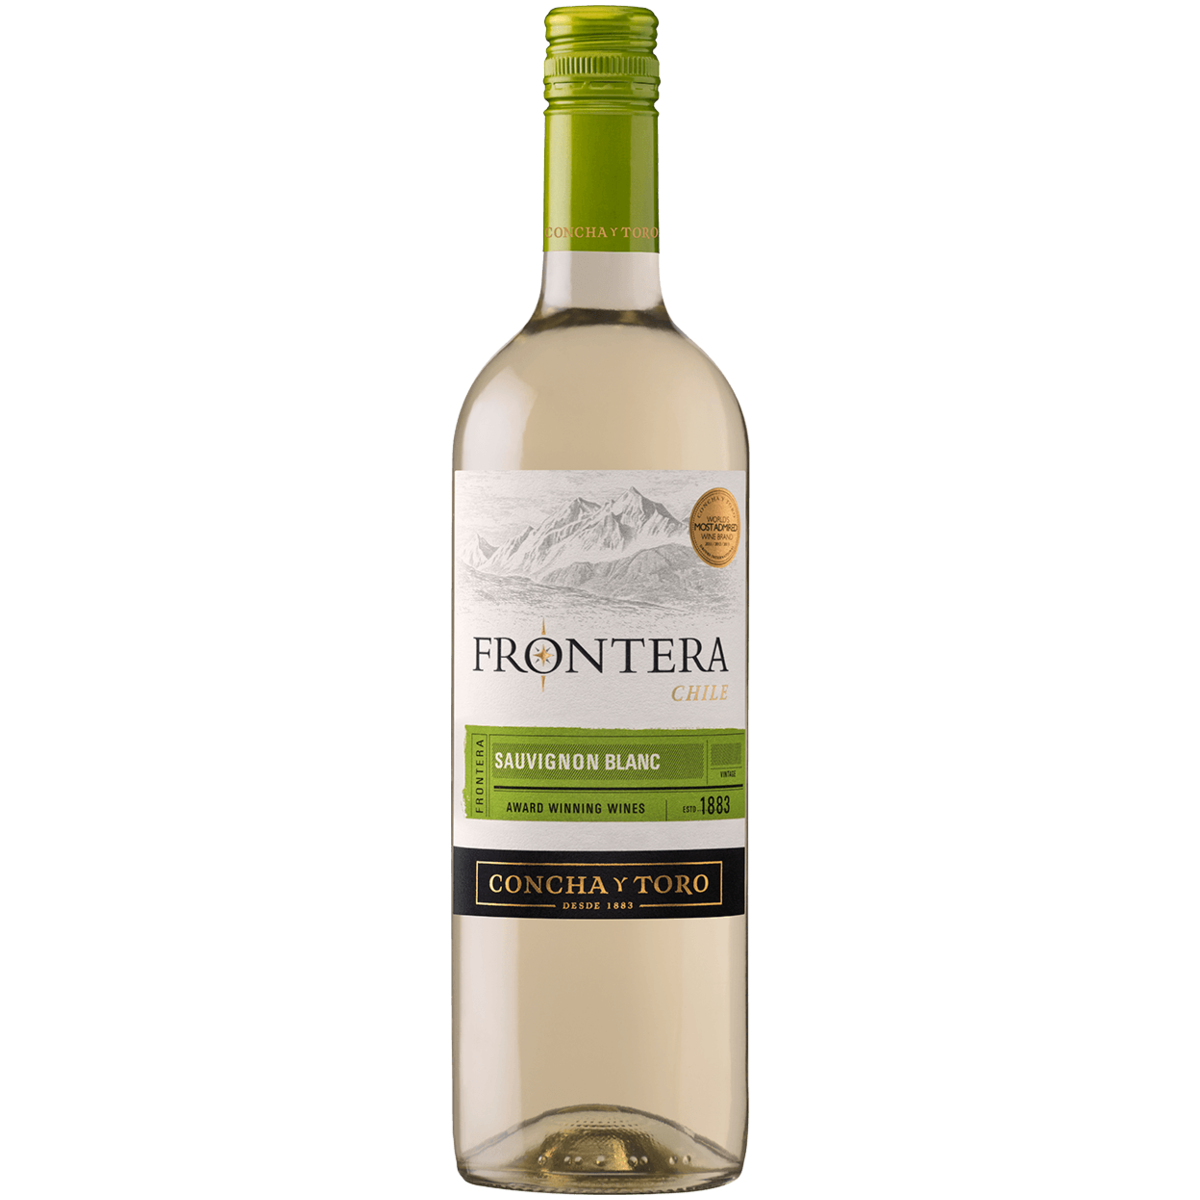 Совиньон вино белое. Вино Frontera Sauvignon Blanc. Вино beroniaverdejo Rueda do 2017 0.75 л. Вердехо Руэда вино. Фронтера Шардоне белое полусухое.